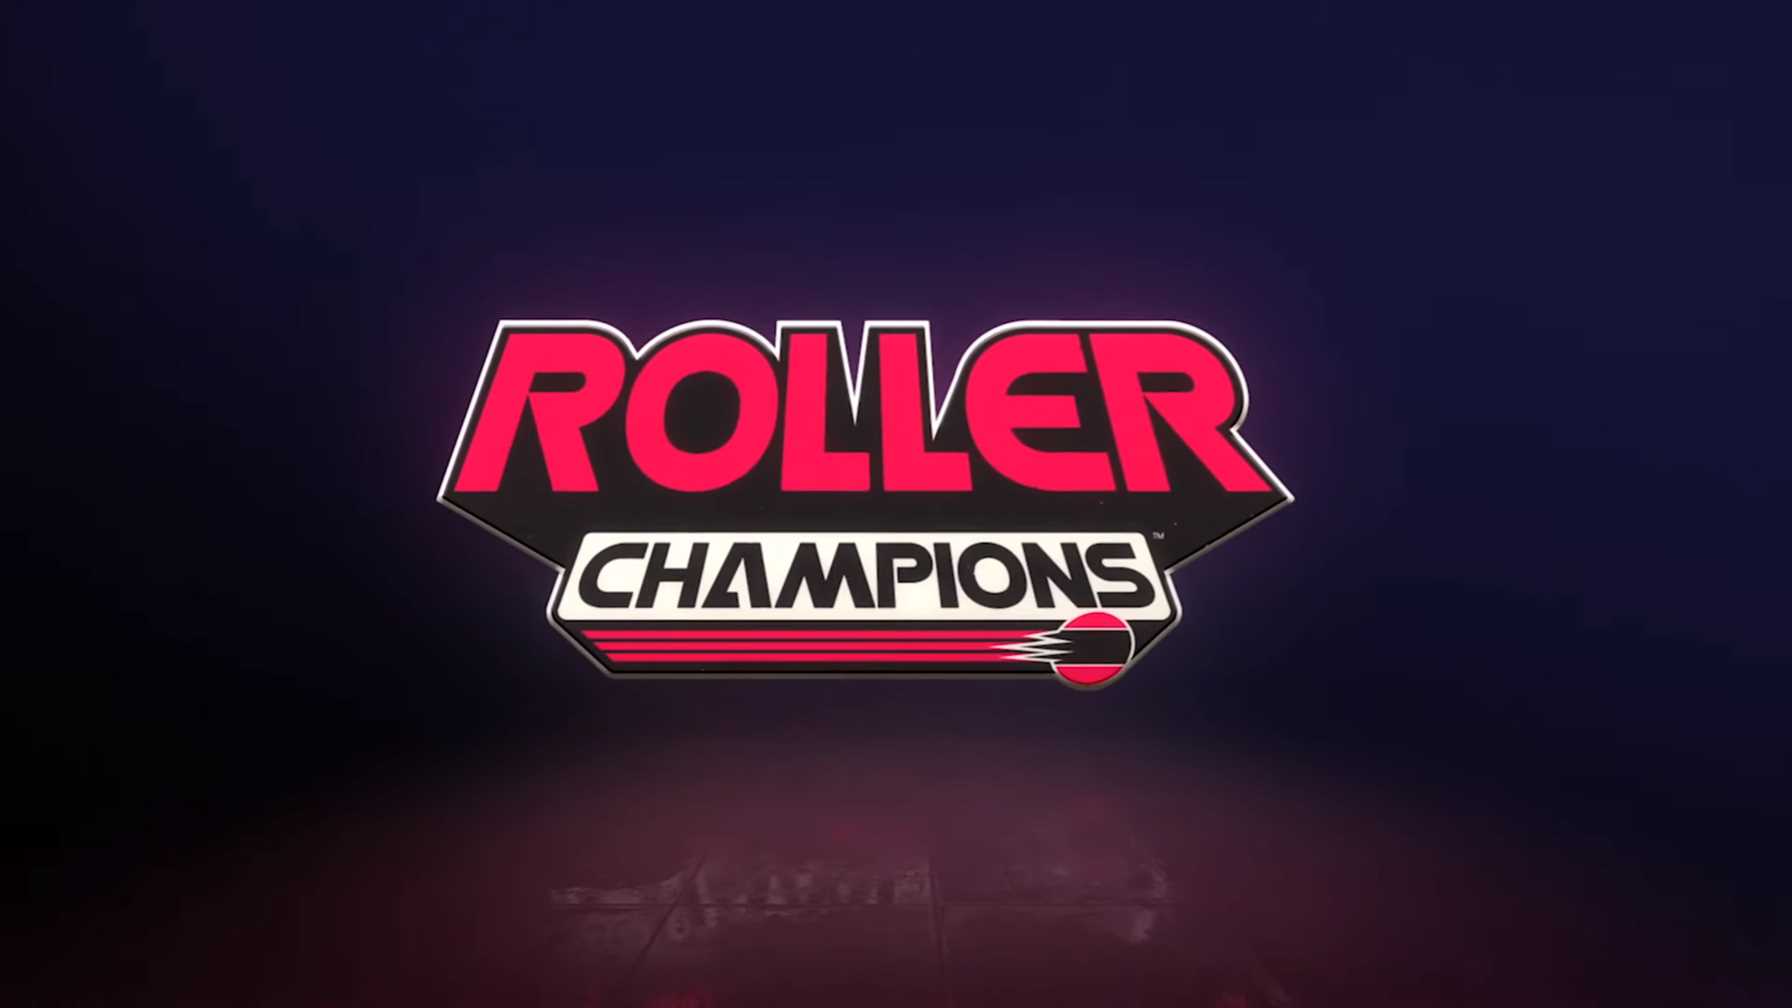 roller champions trailer music